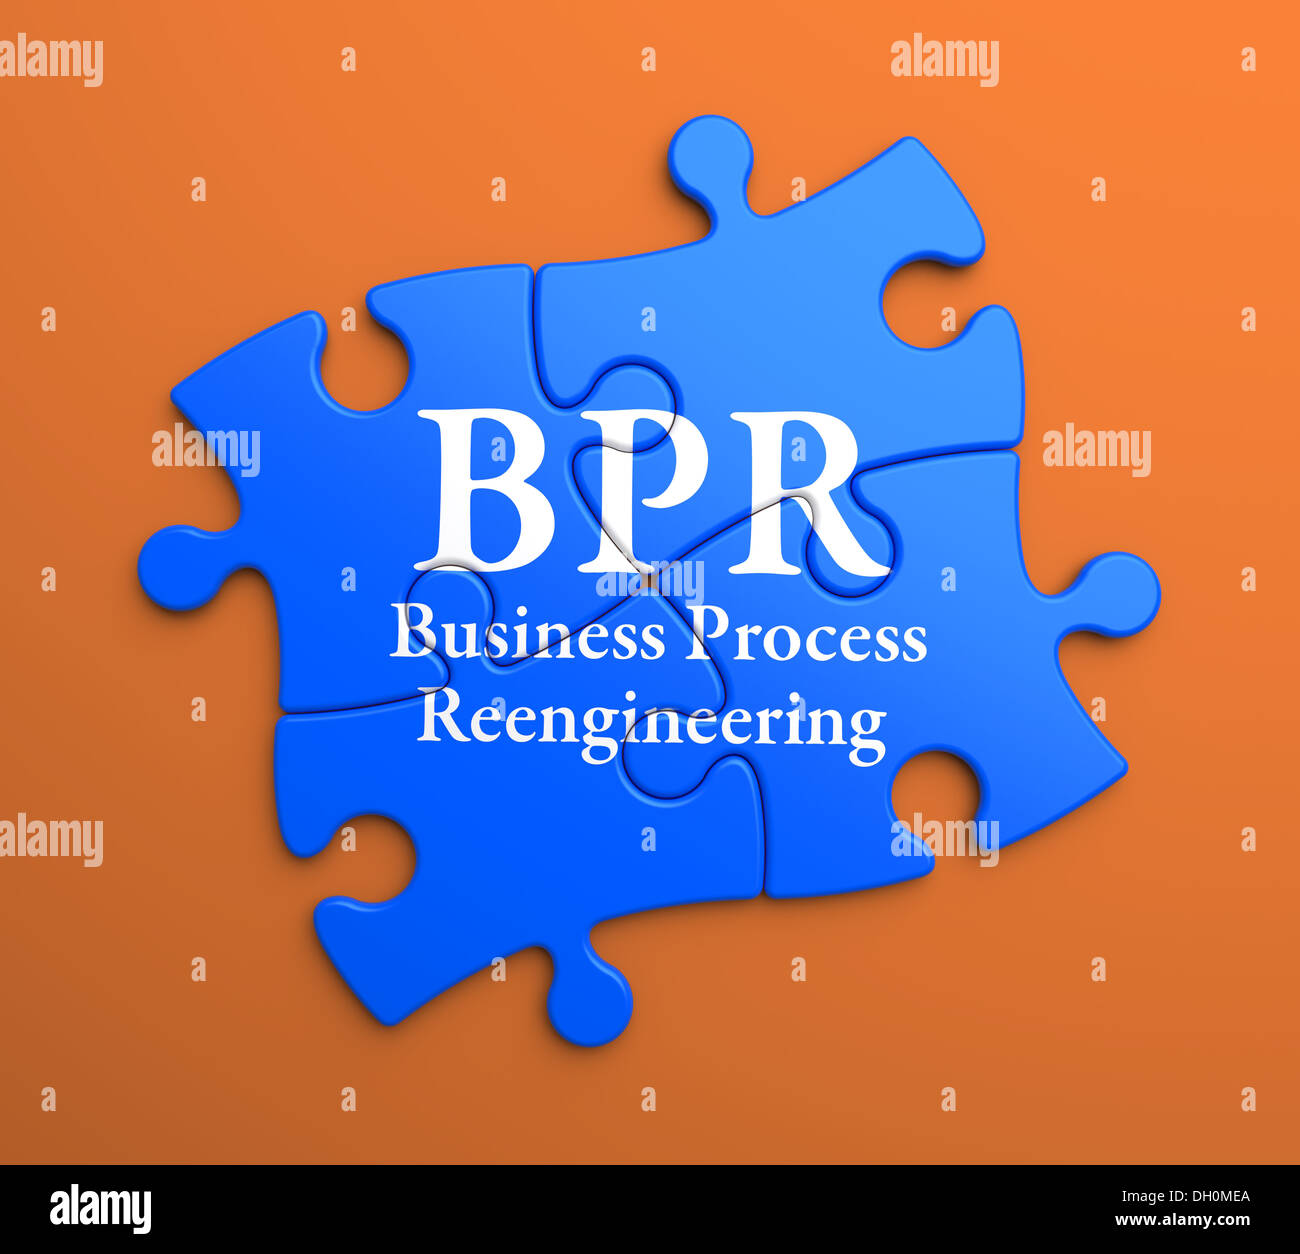 BPR on Blue Puzzle Pieces. Business Concept. Stock Photo